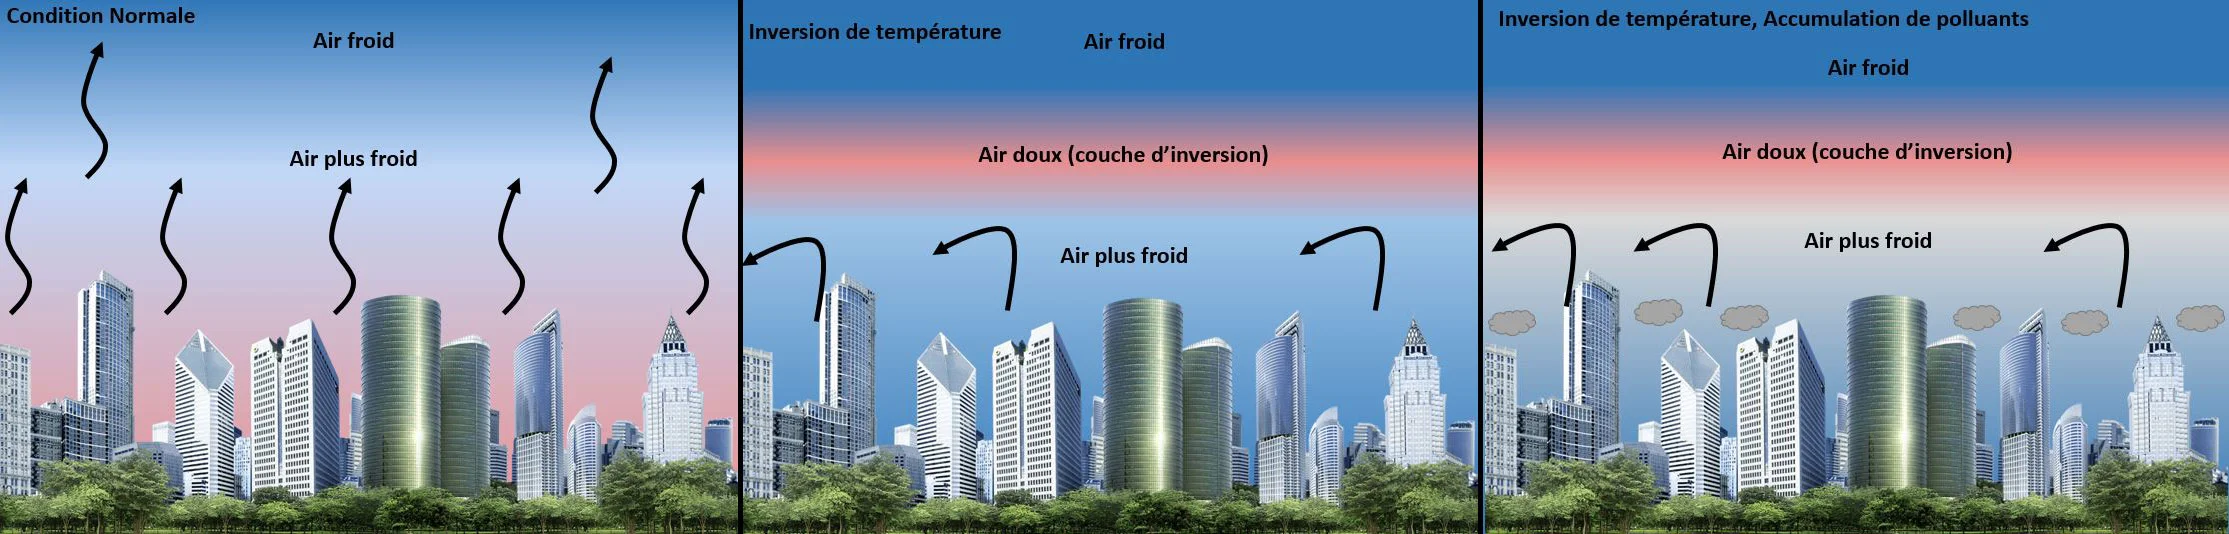 Temperature inversion scheme